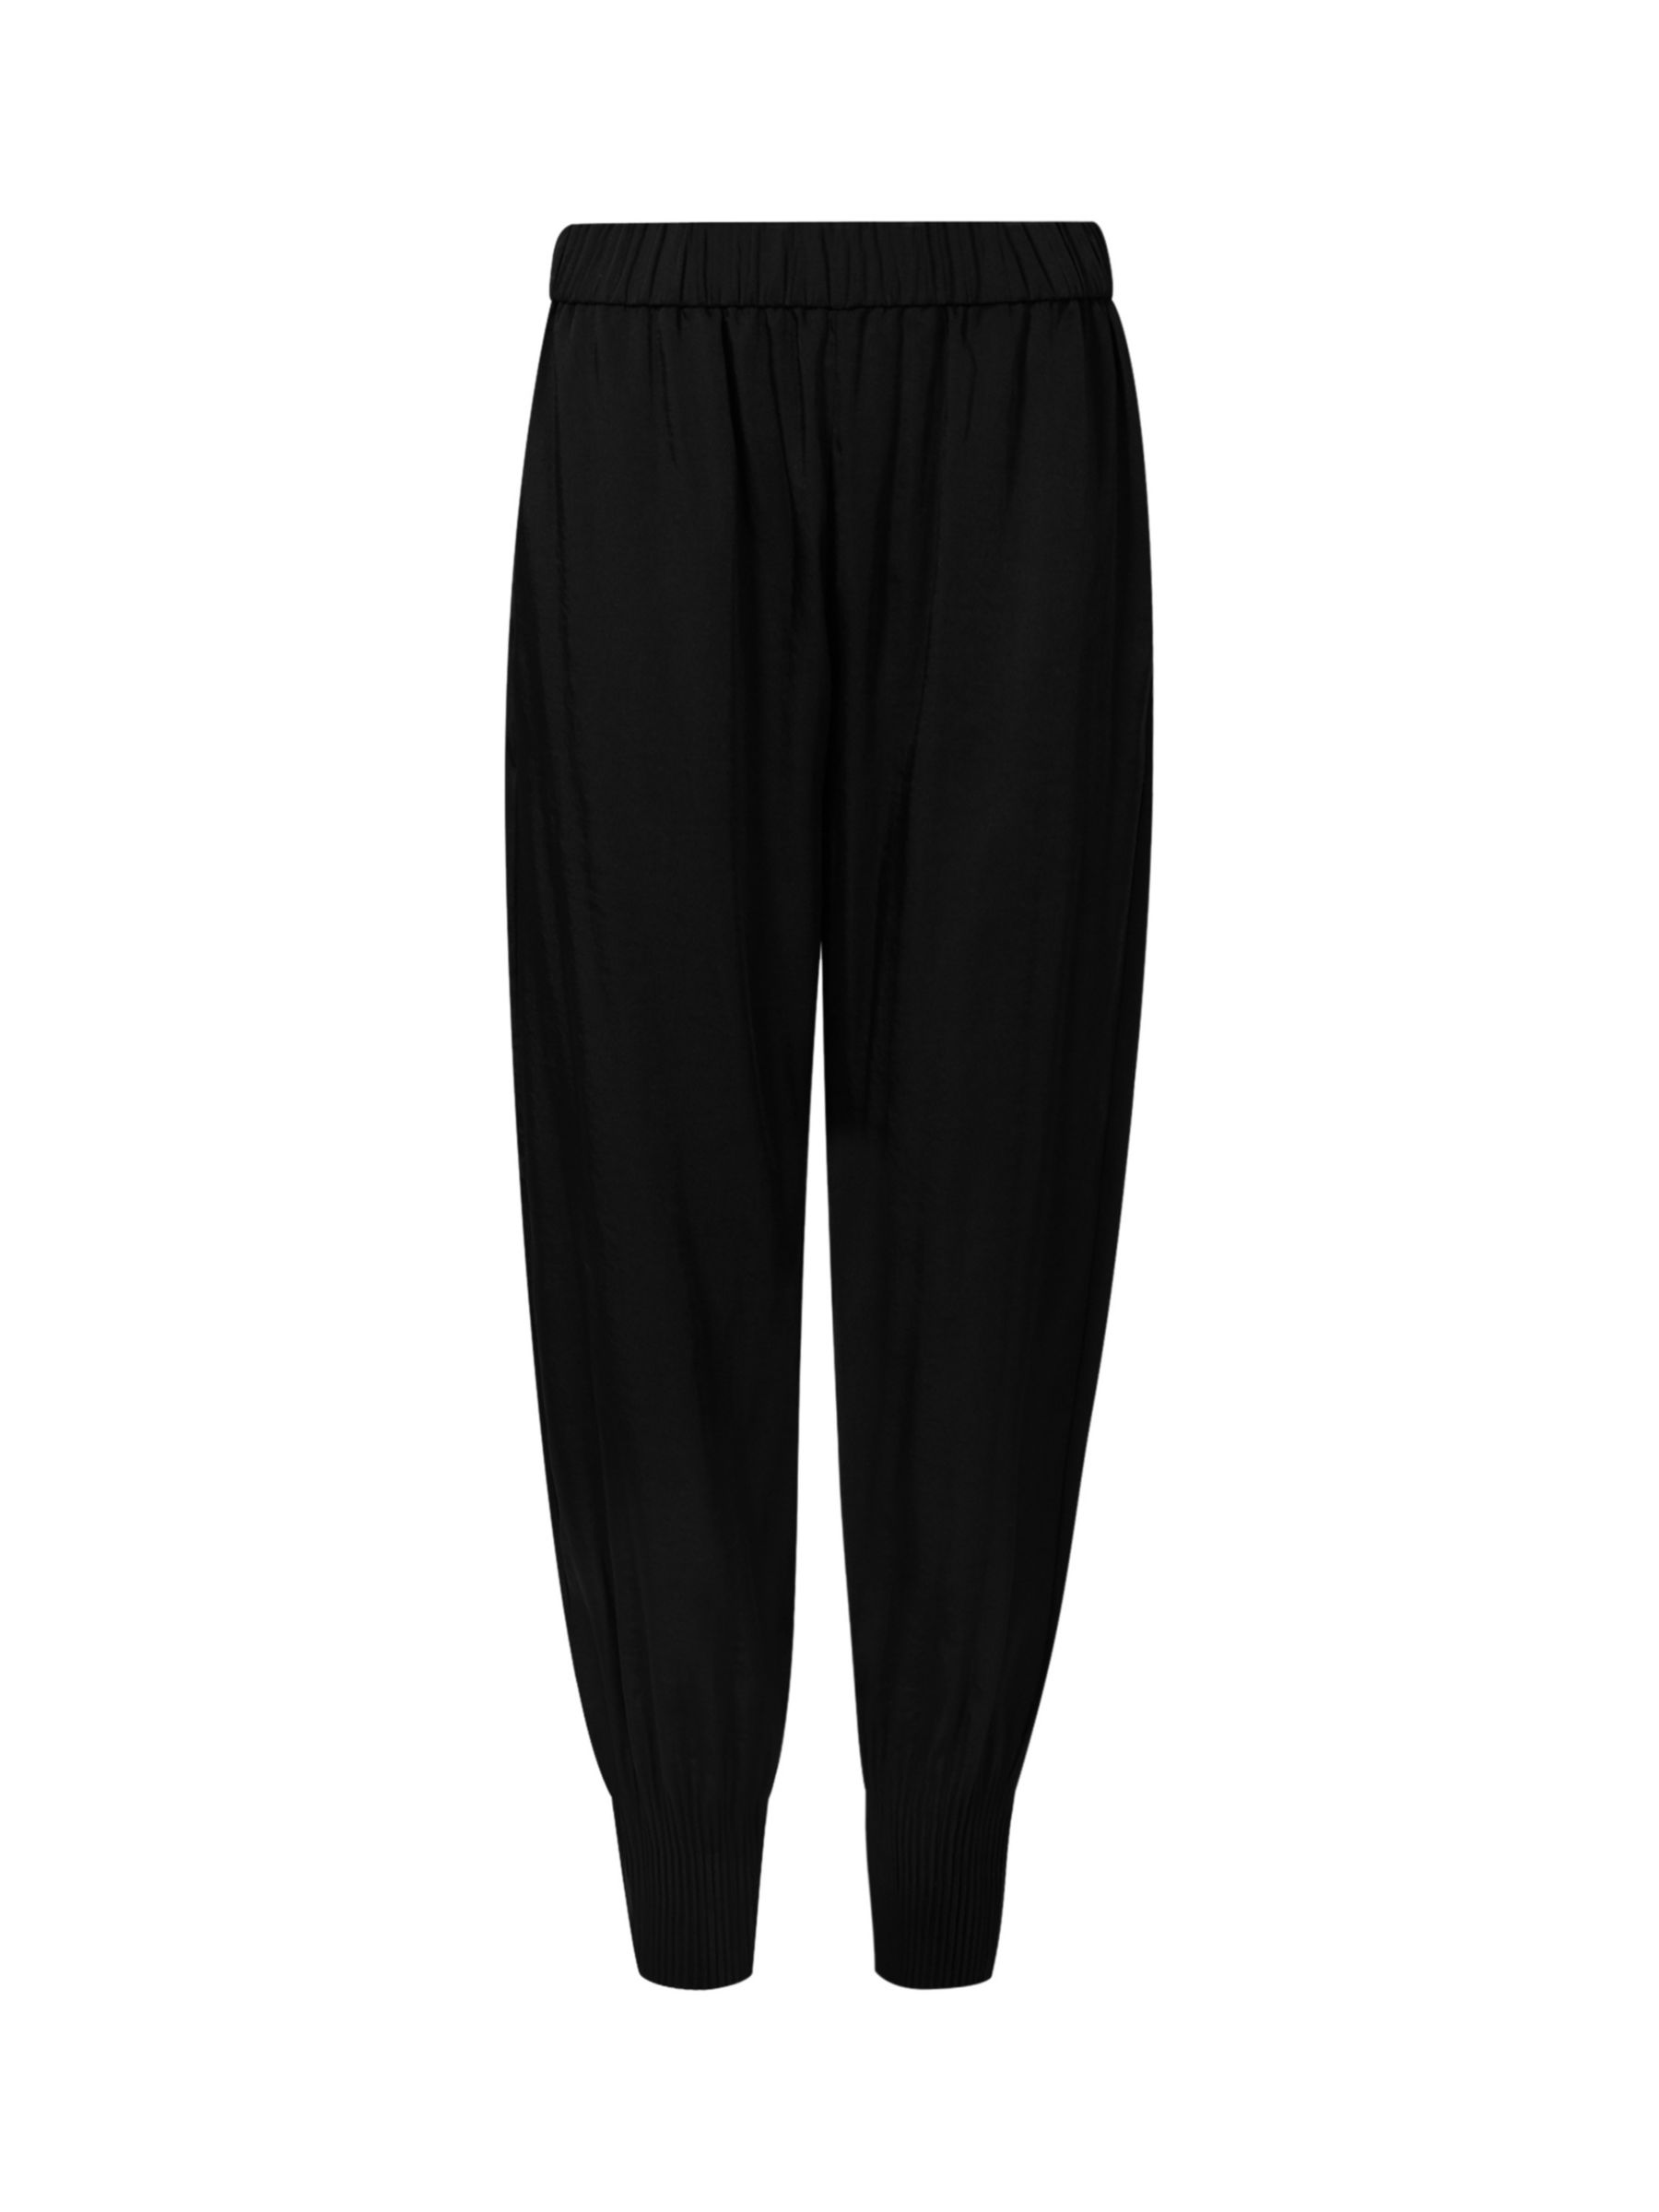 AllSaints Nala Tapered Trousers, Black at John Lewis & Partners